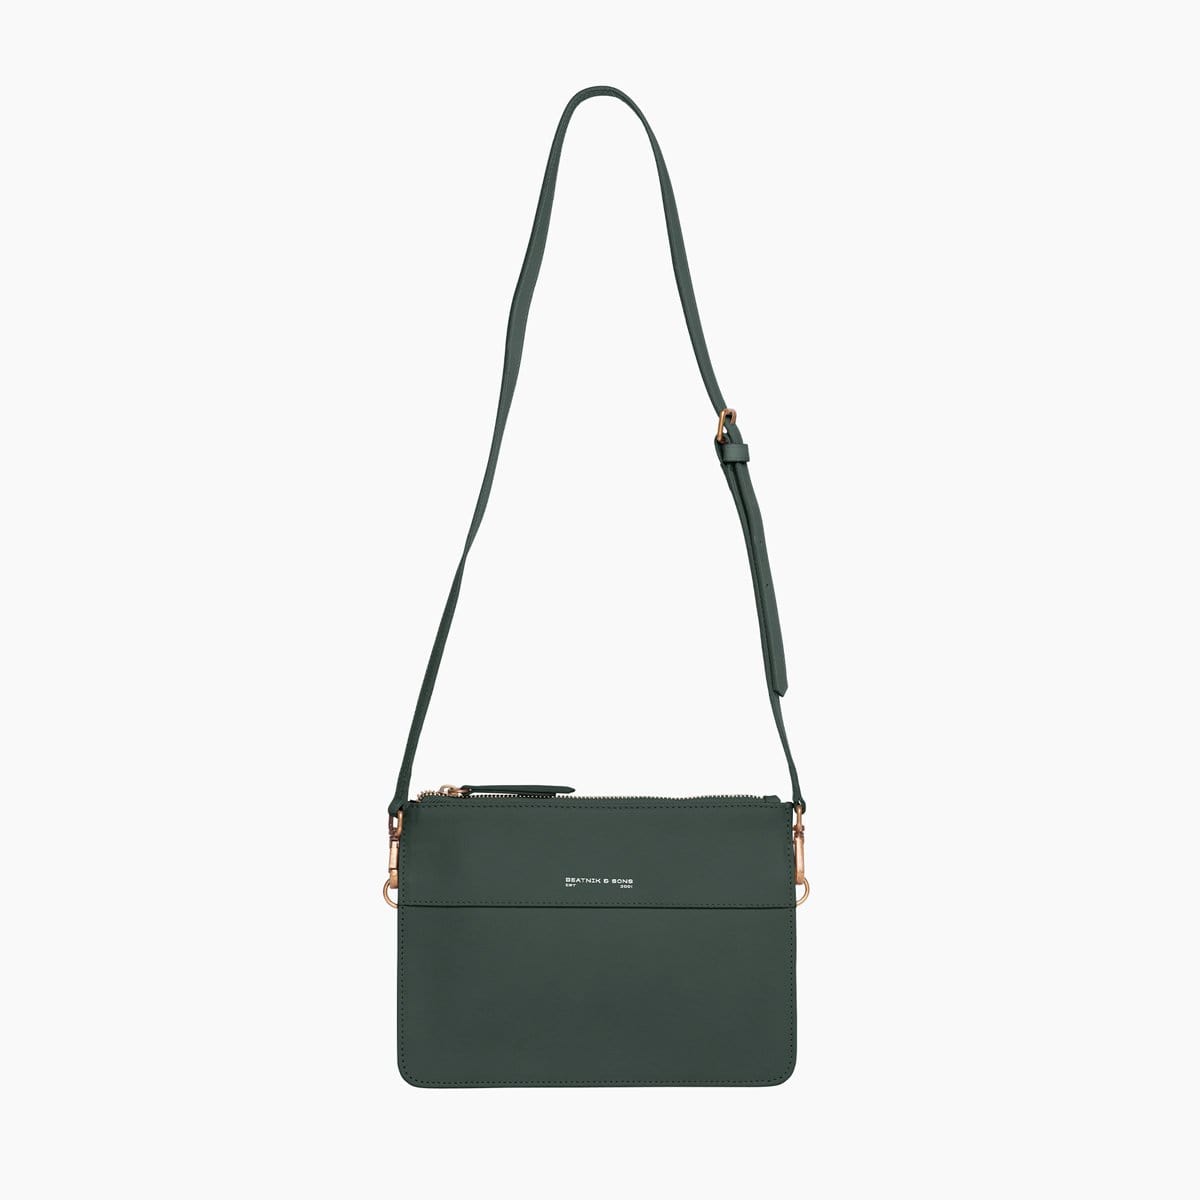 Beatnik & Sons Leather handbags the Terry flat bag